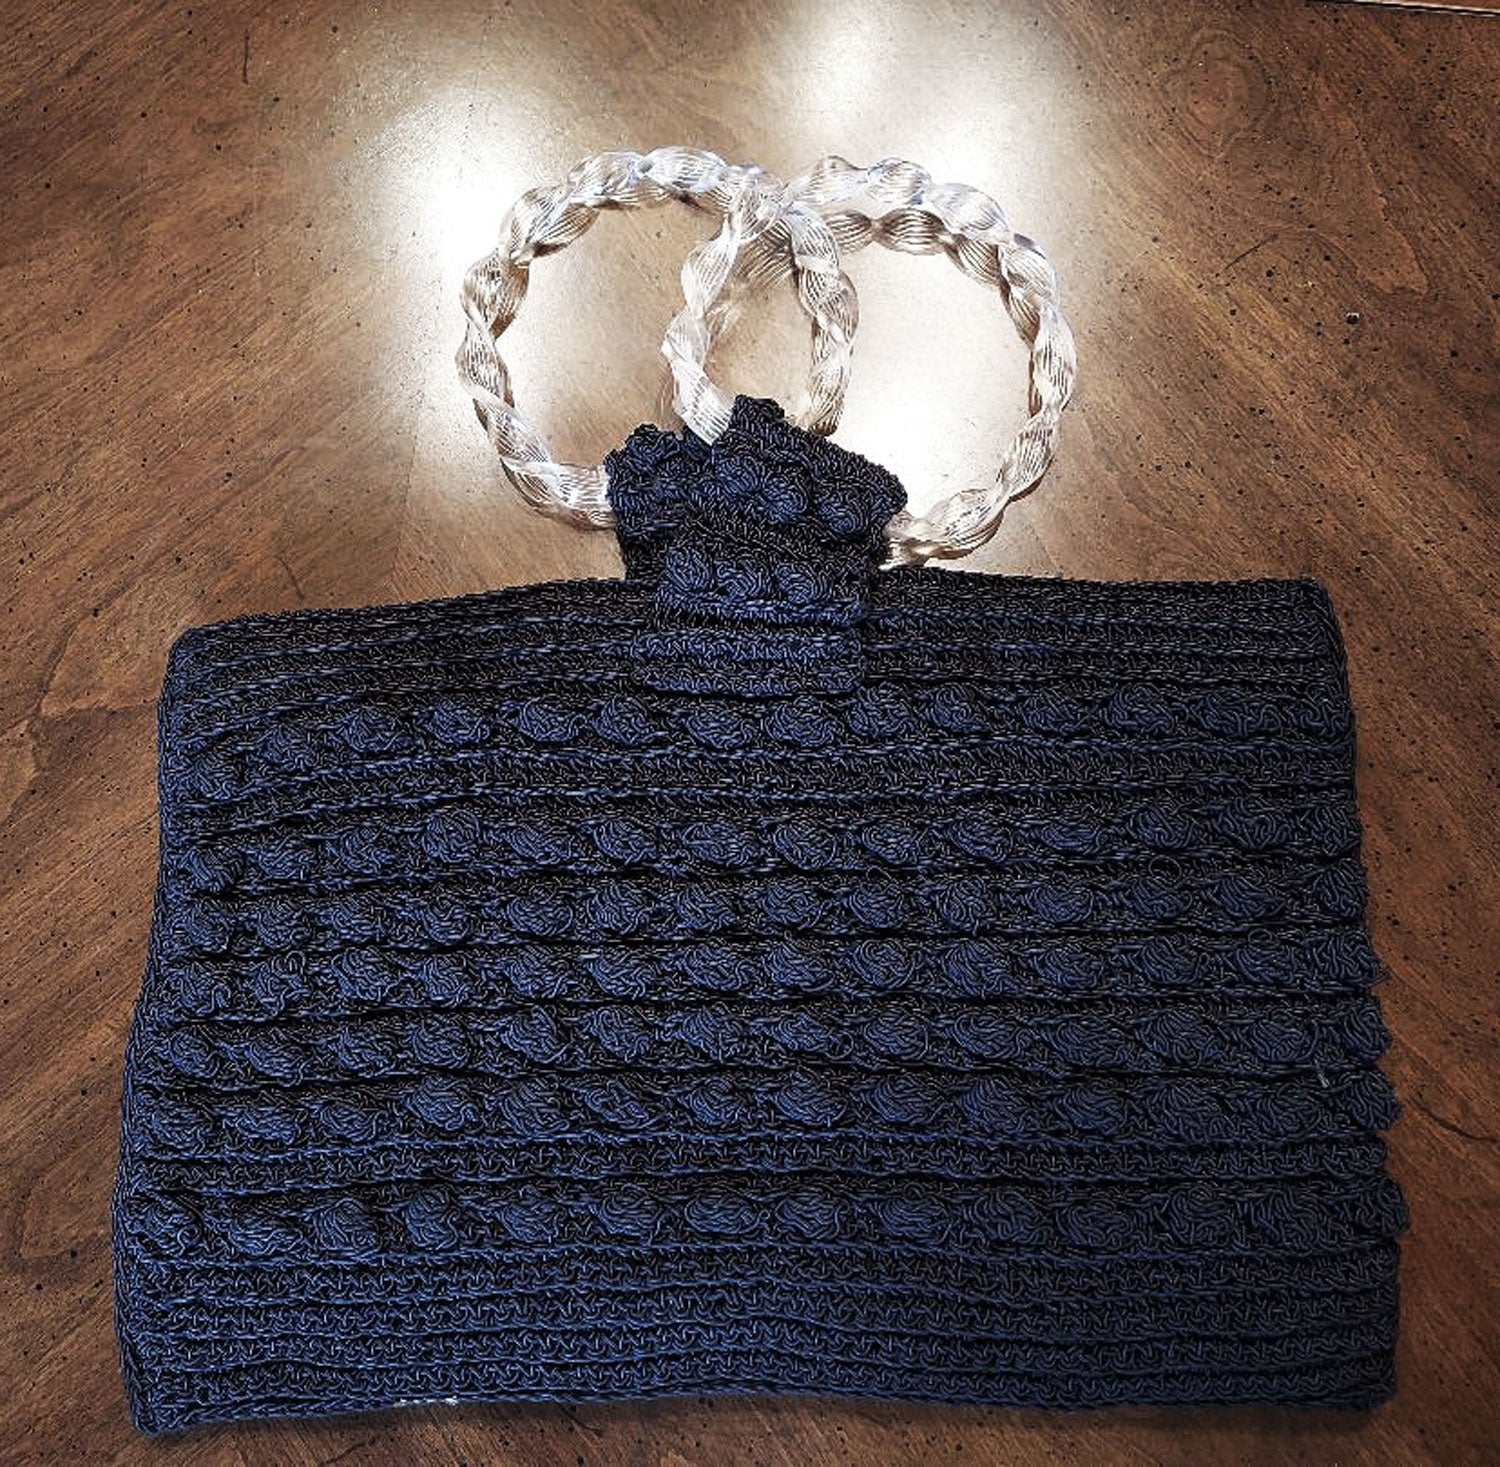 Black crochet bag | Black crochet, Crochet woman, Crochet